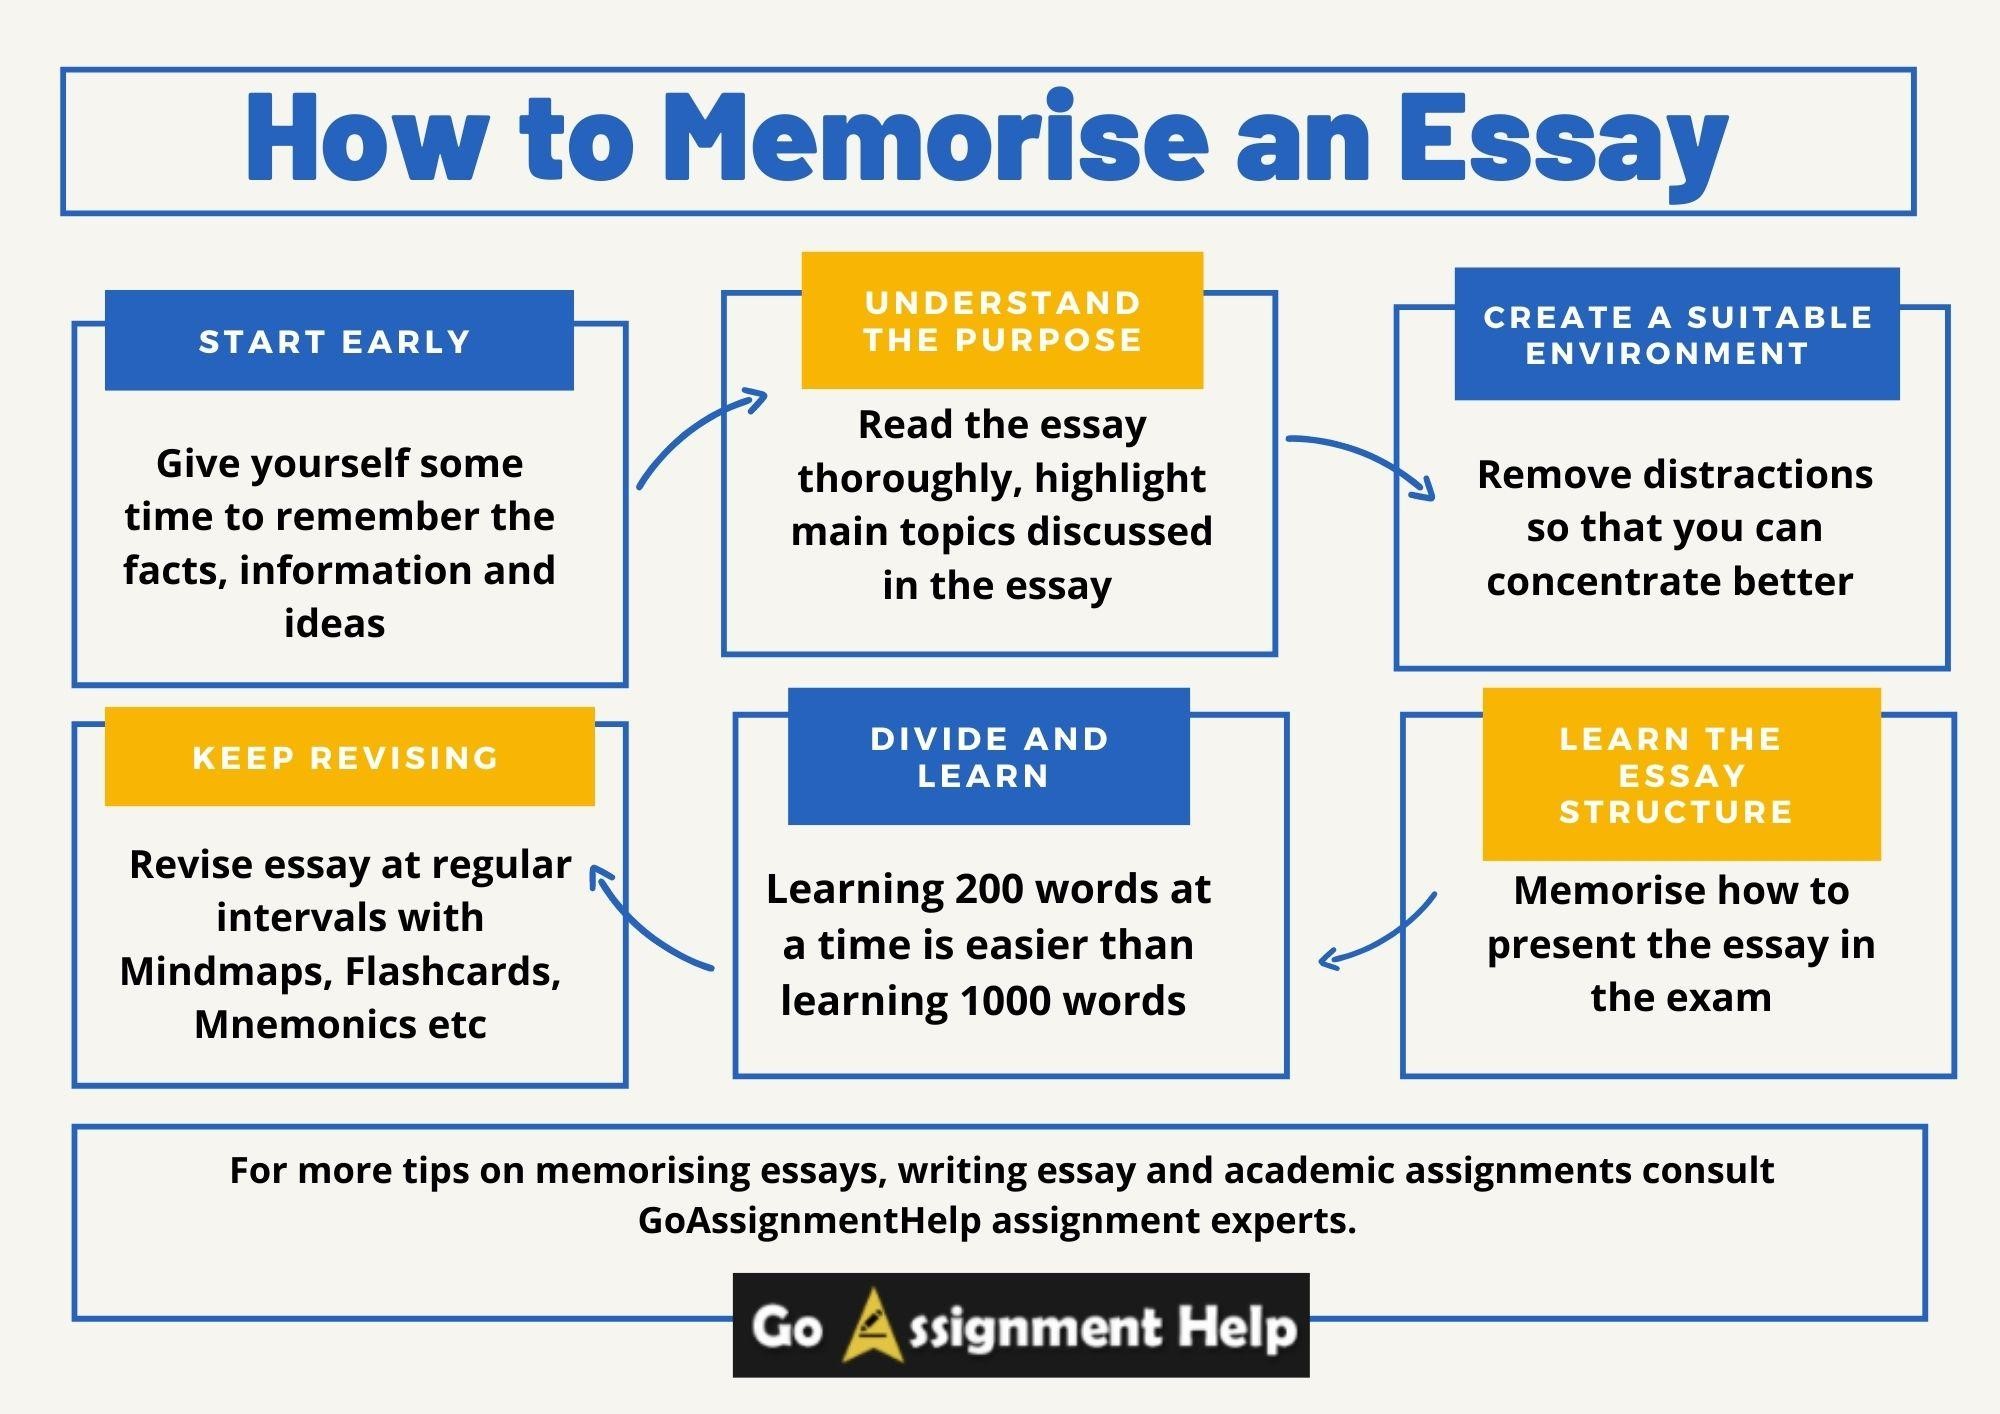 how to memorise an essay for an exam